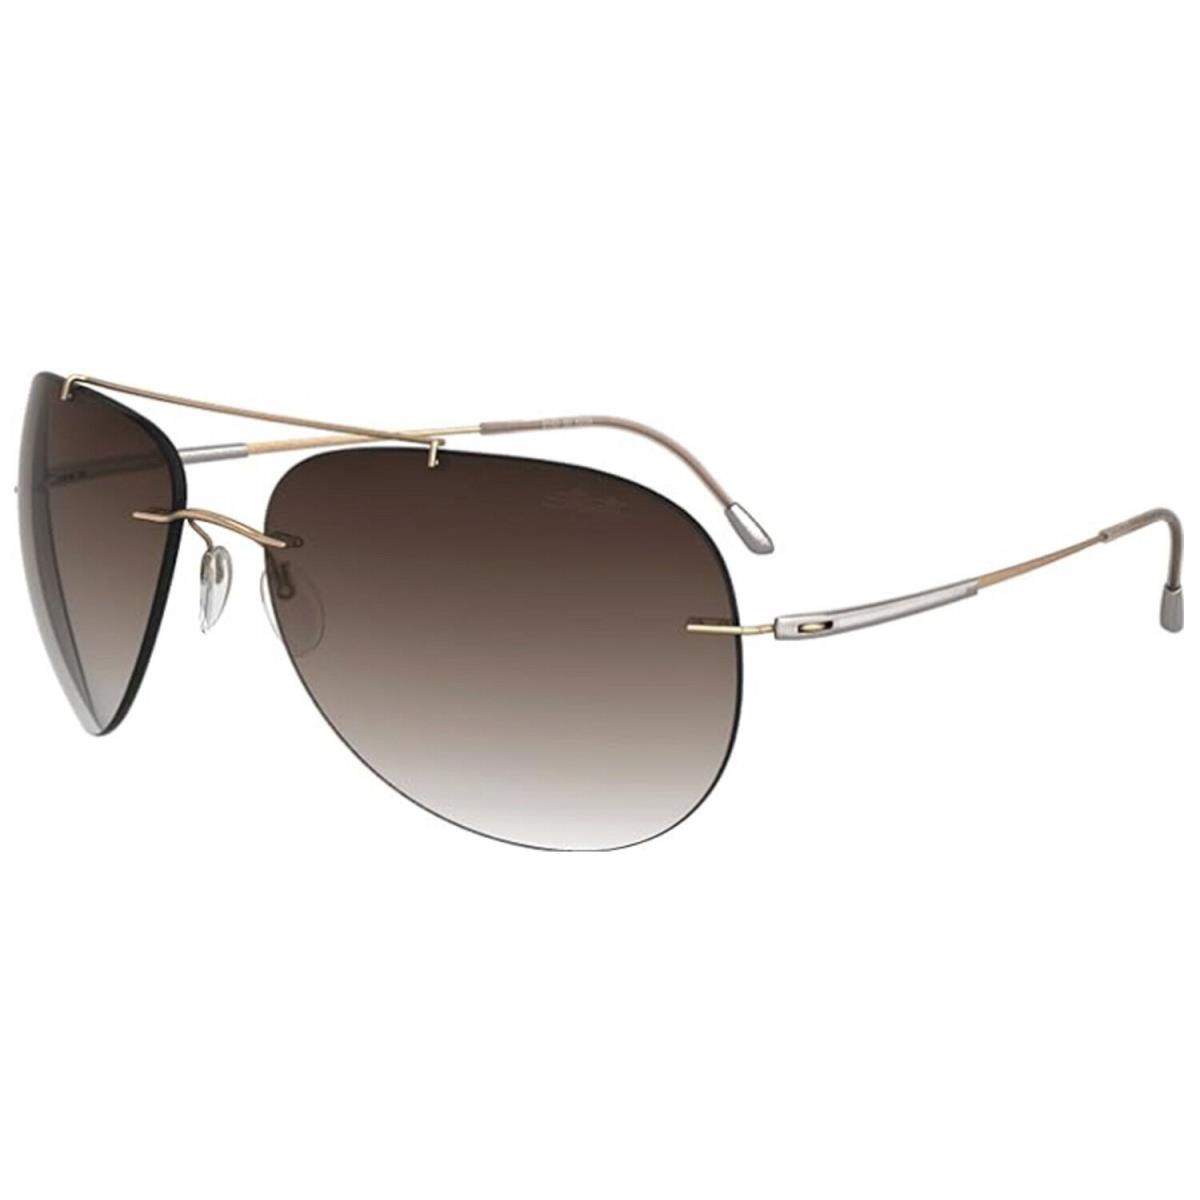 Silhouette Sunglasses Adventurer 62/16/135 Black Silver Polarizedbrown 8667-6201